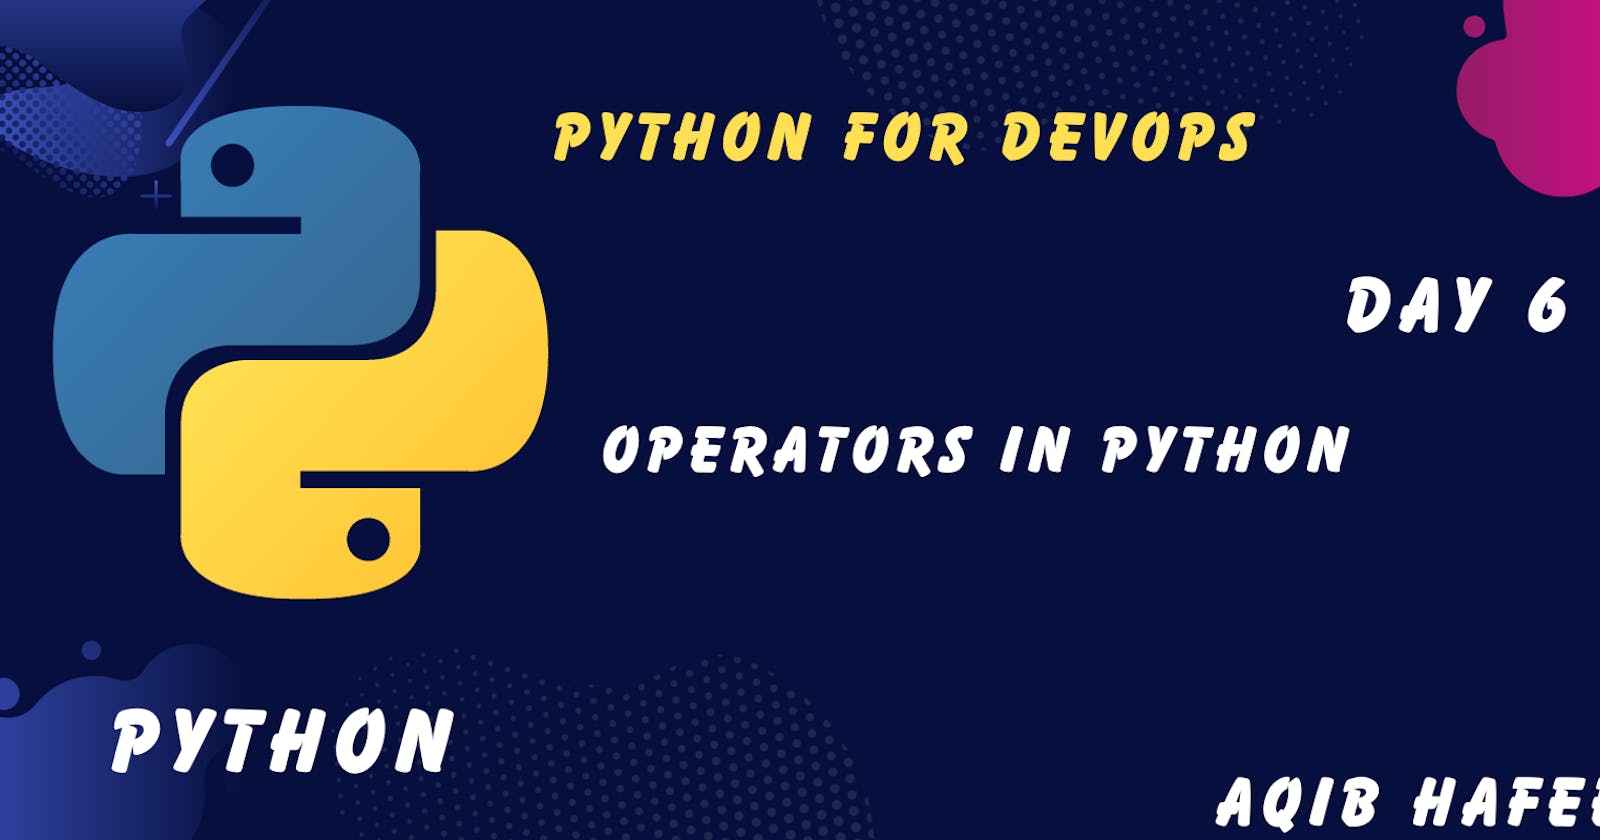 Day 6: Operators in Python for DevOps